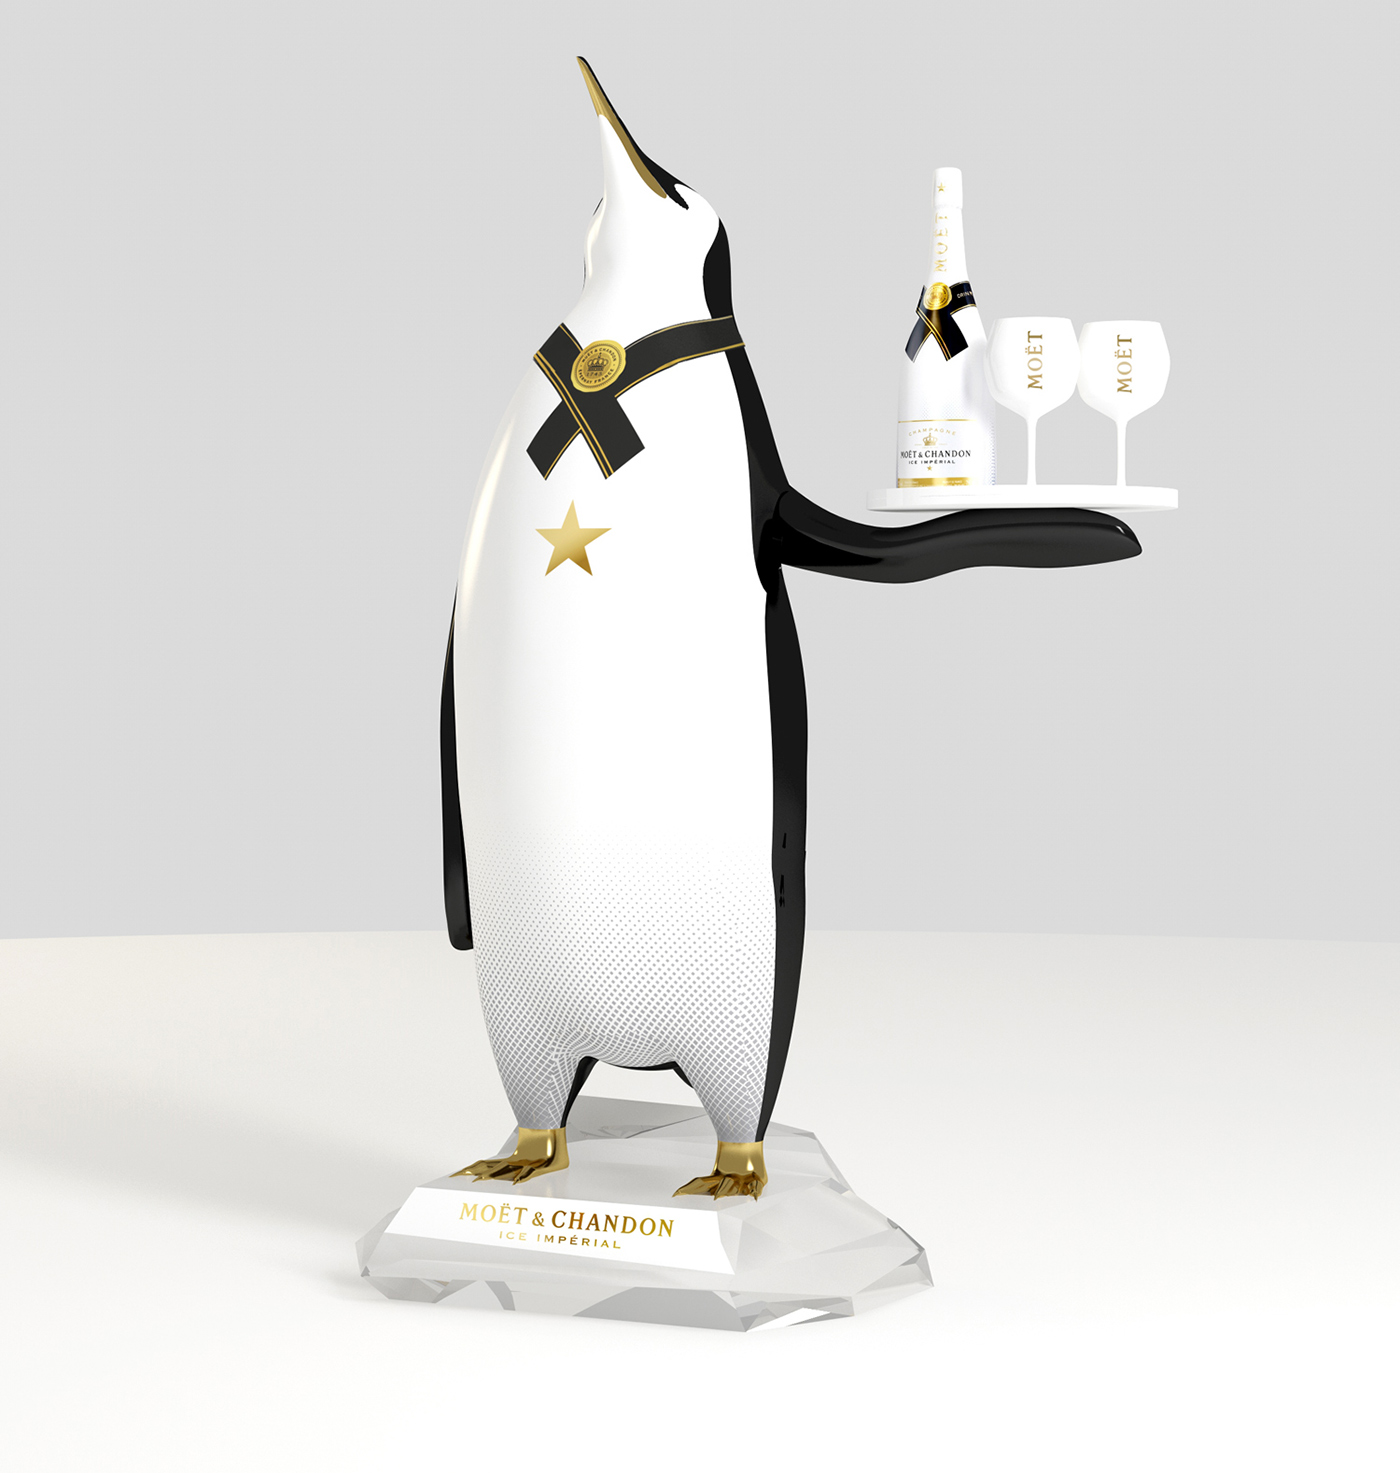 3D CGI CG penguin Moet Champagne Render cinema4d innovation creative Retail design